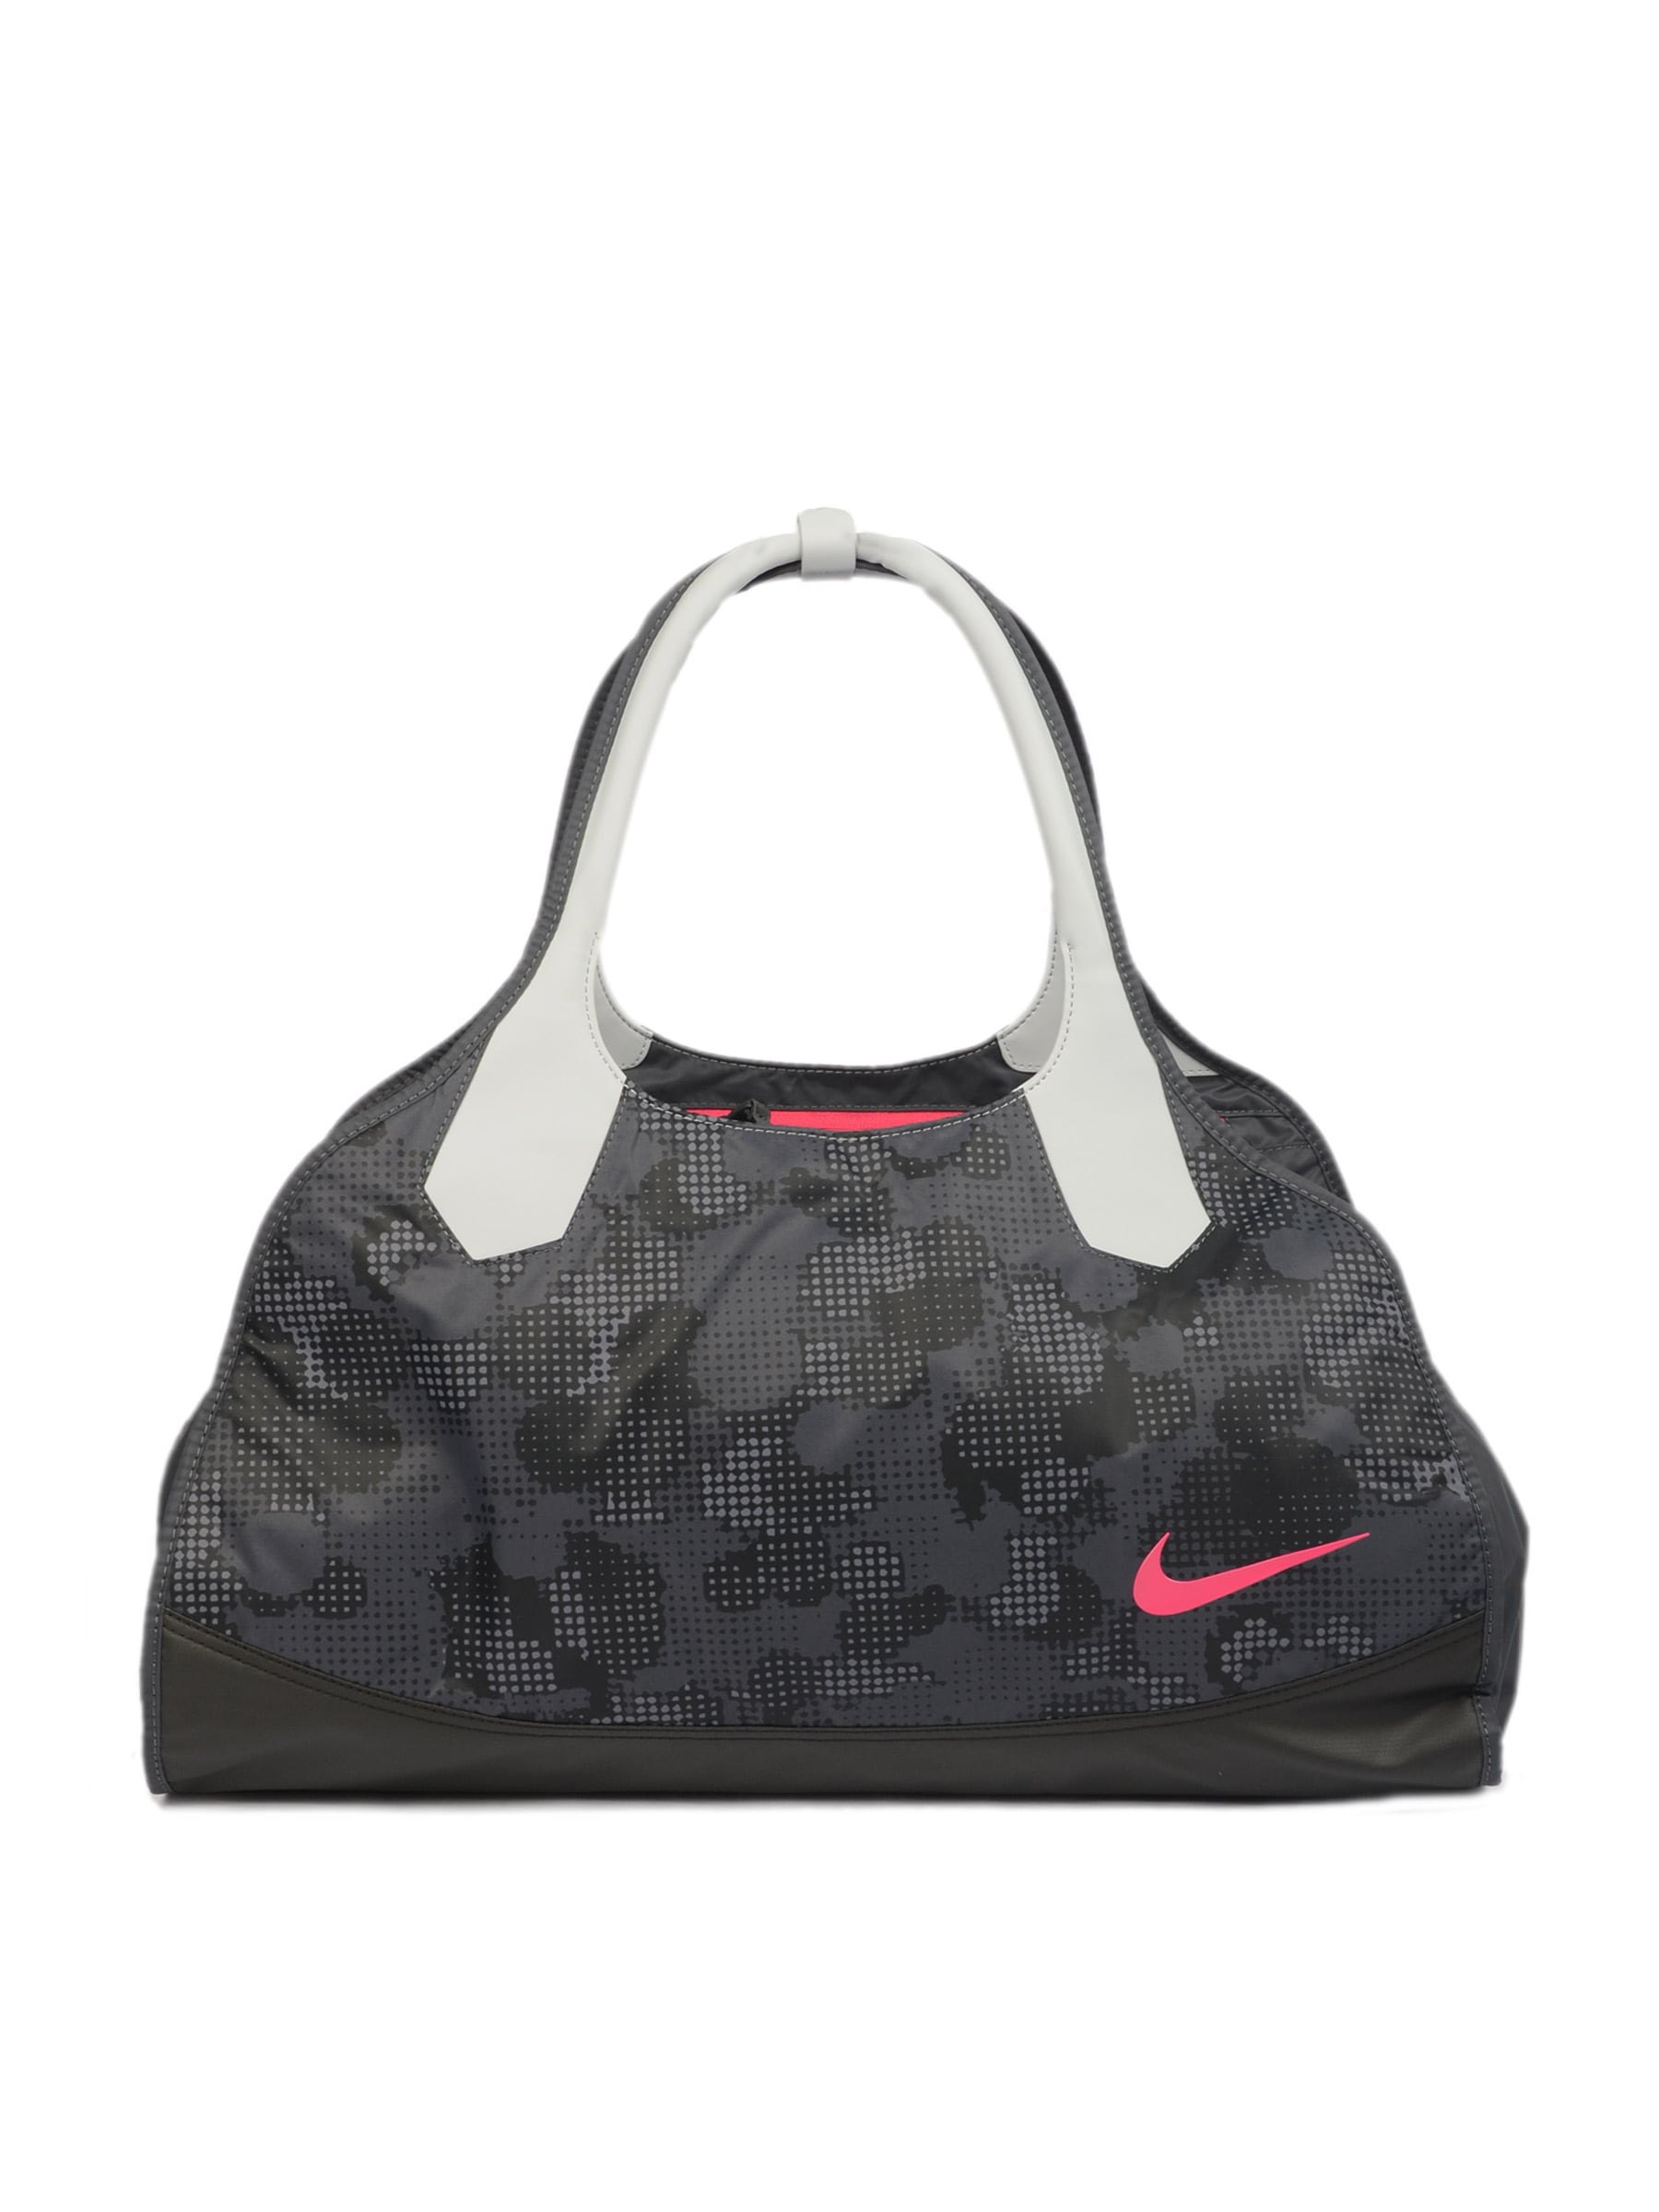 Nike Women Nike Grey handbag Grey Bags